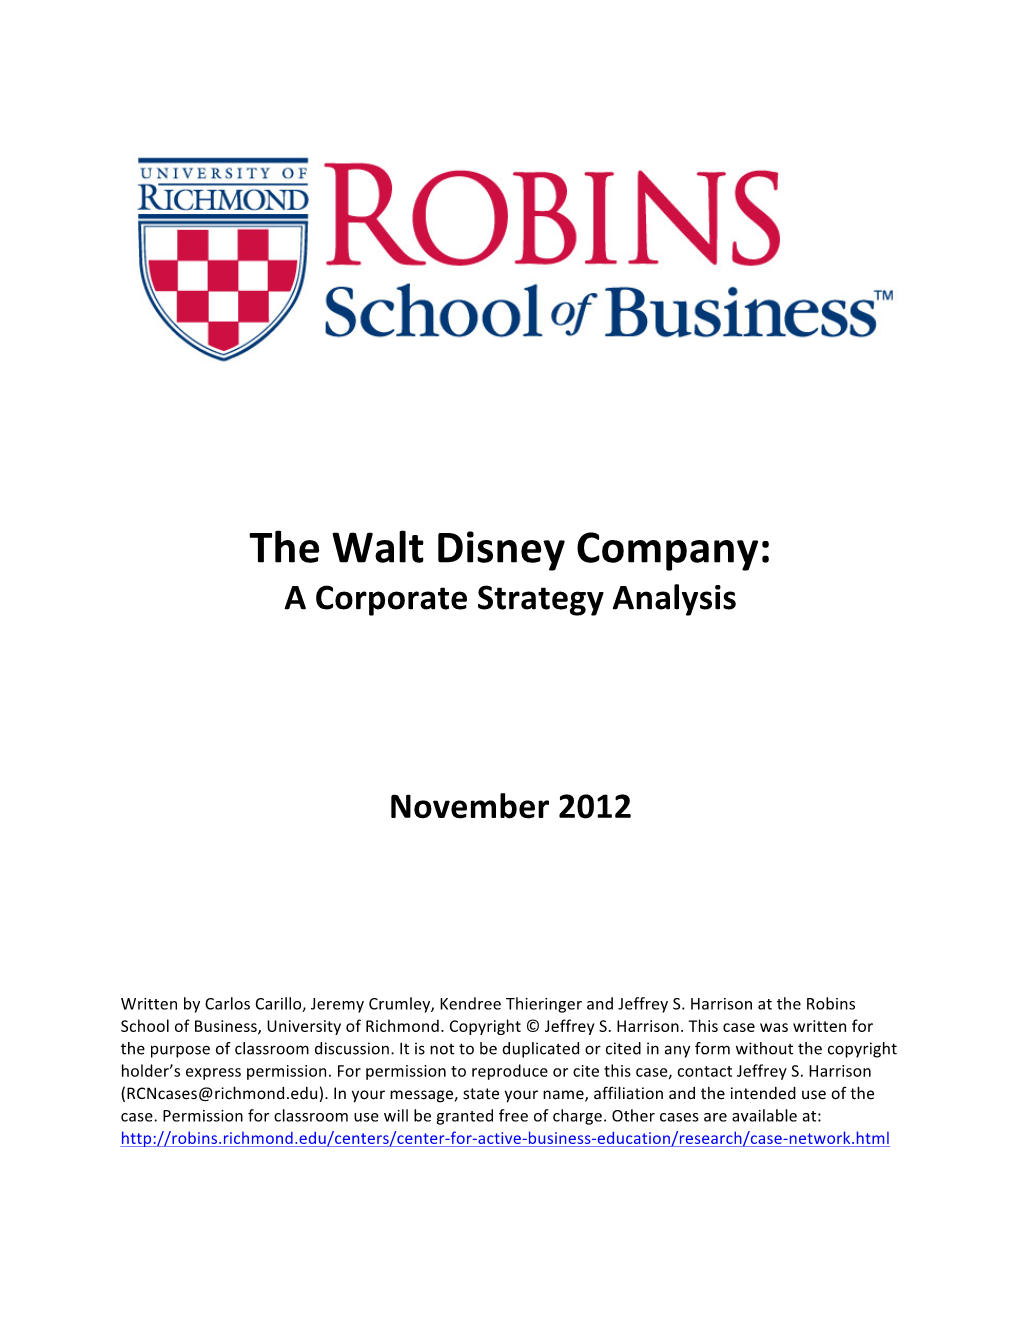 The Walt Disney Company: a Corporate Strategy Analysis